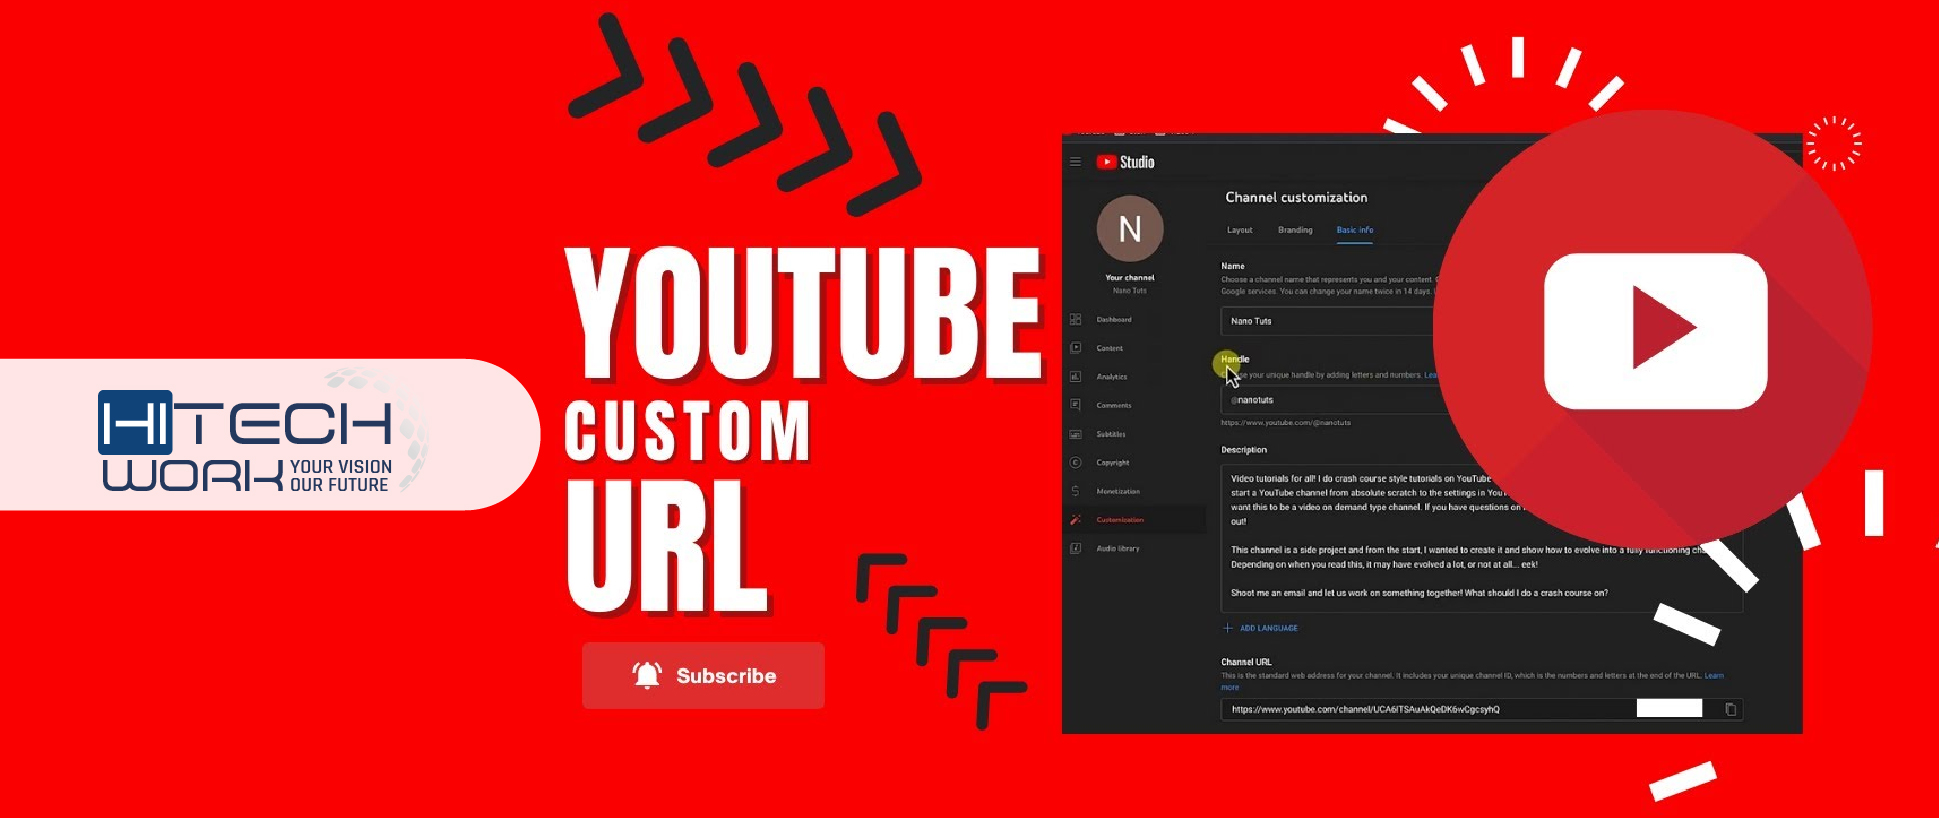 How to get a custom Youtube URL